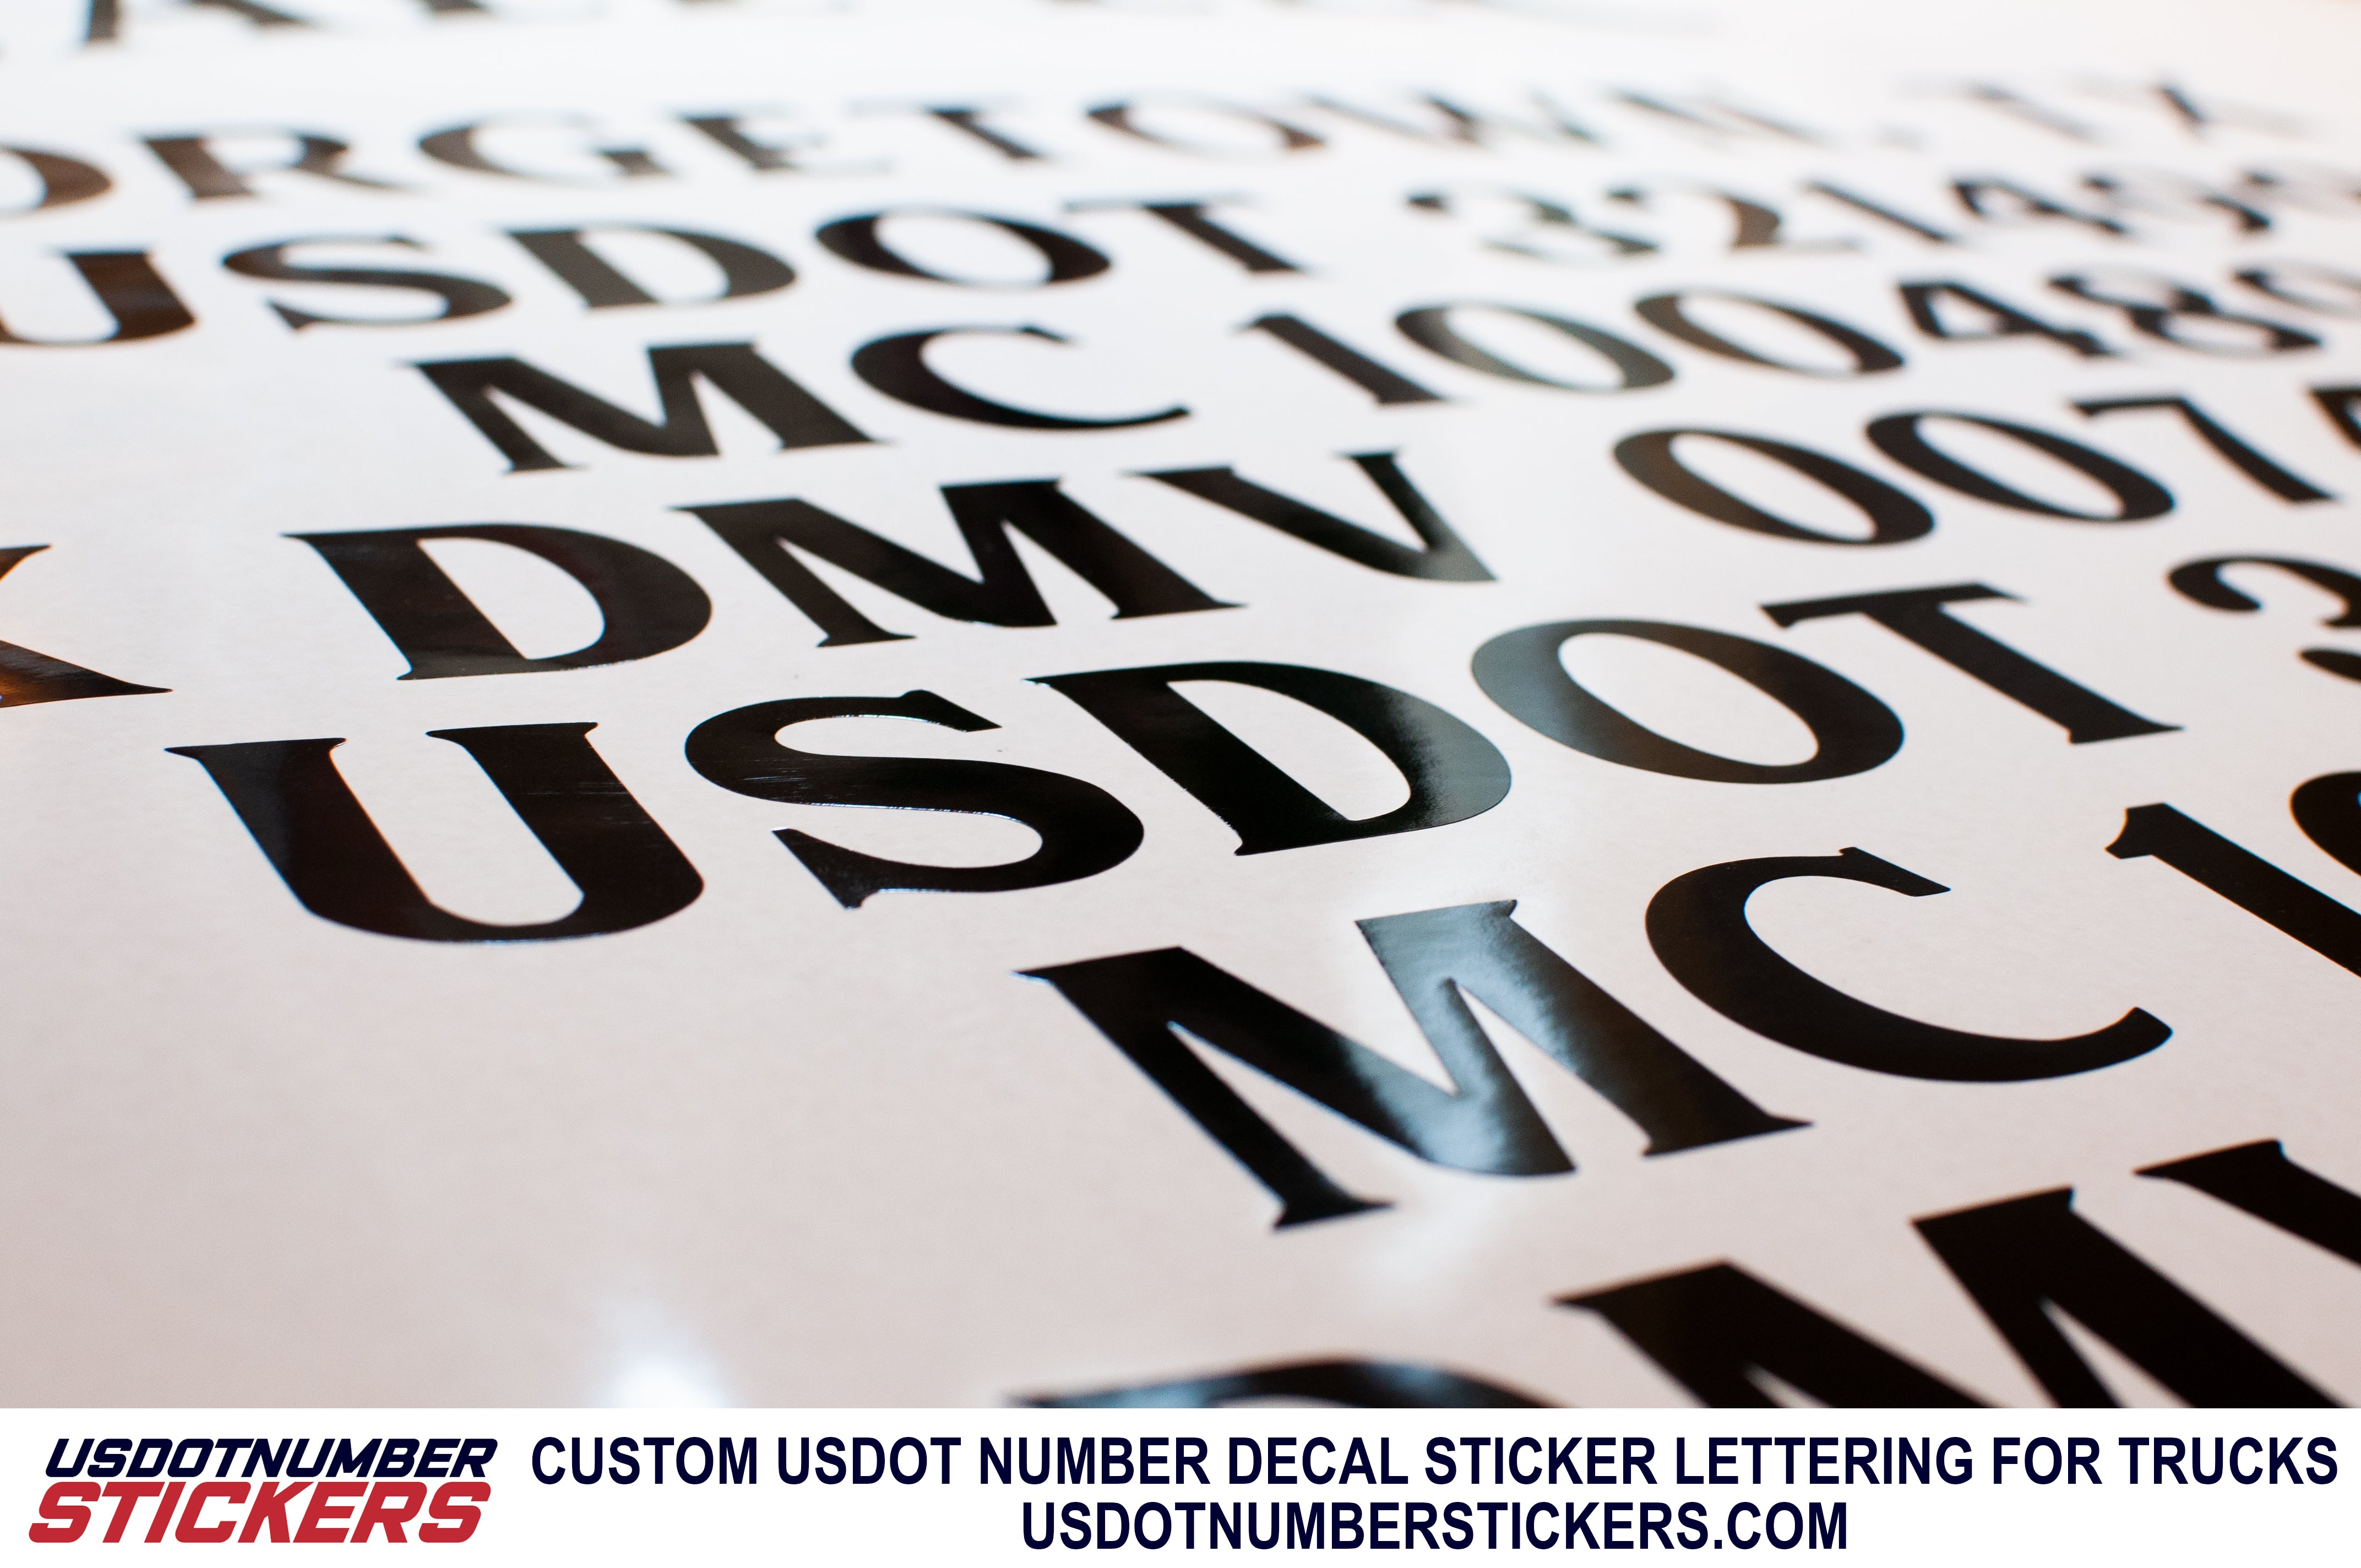 usdot number sticker decal lettering